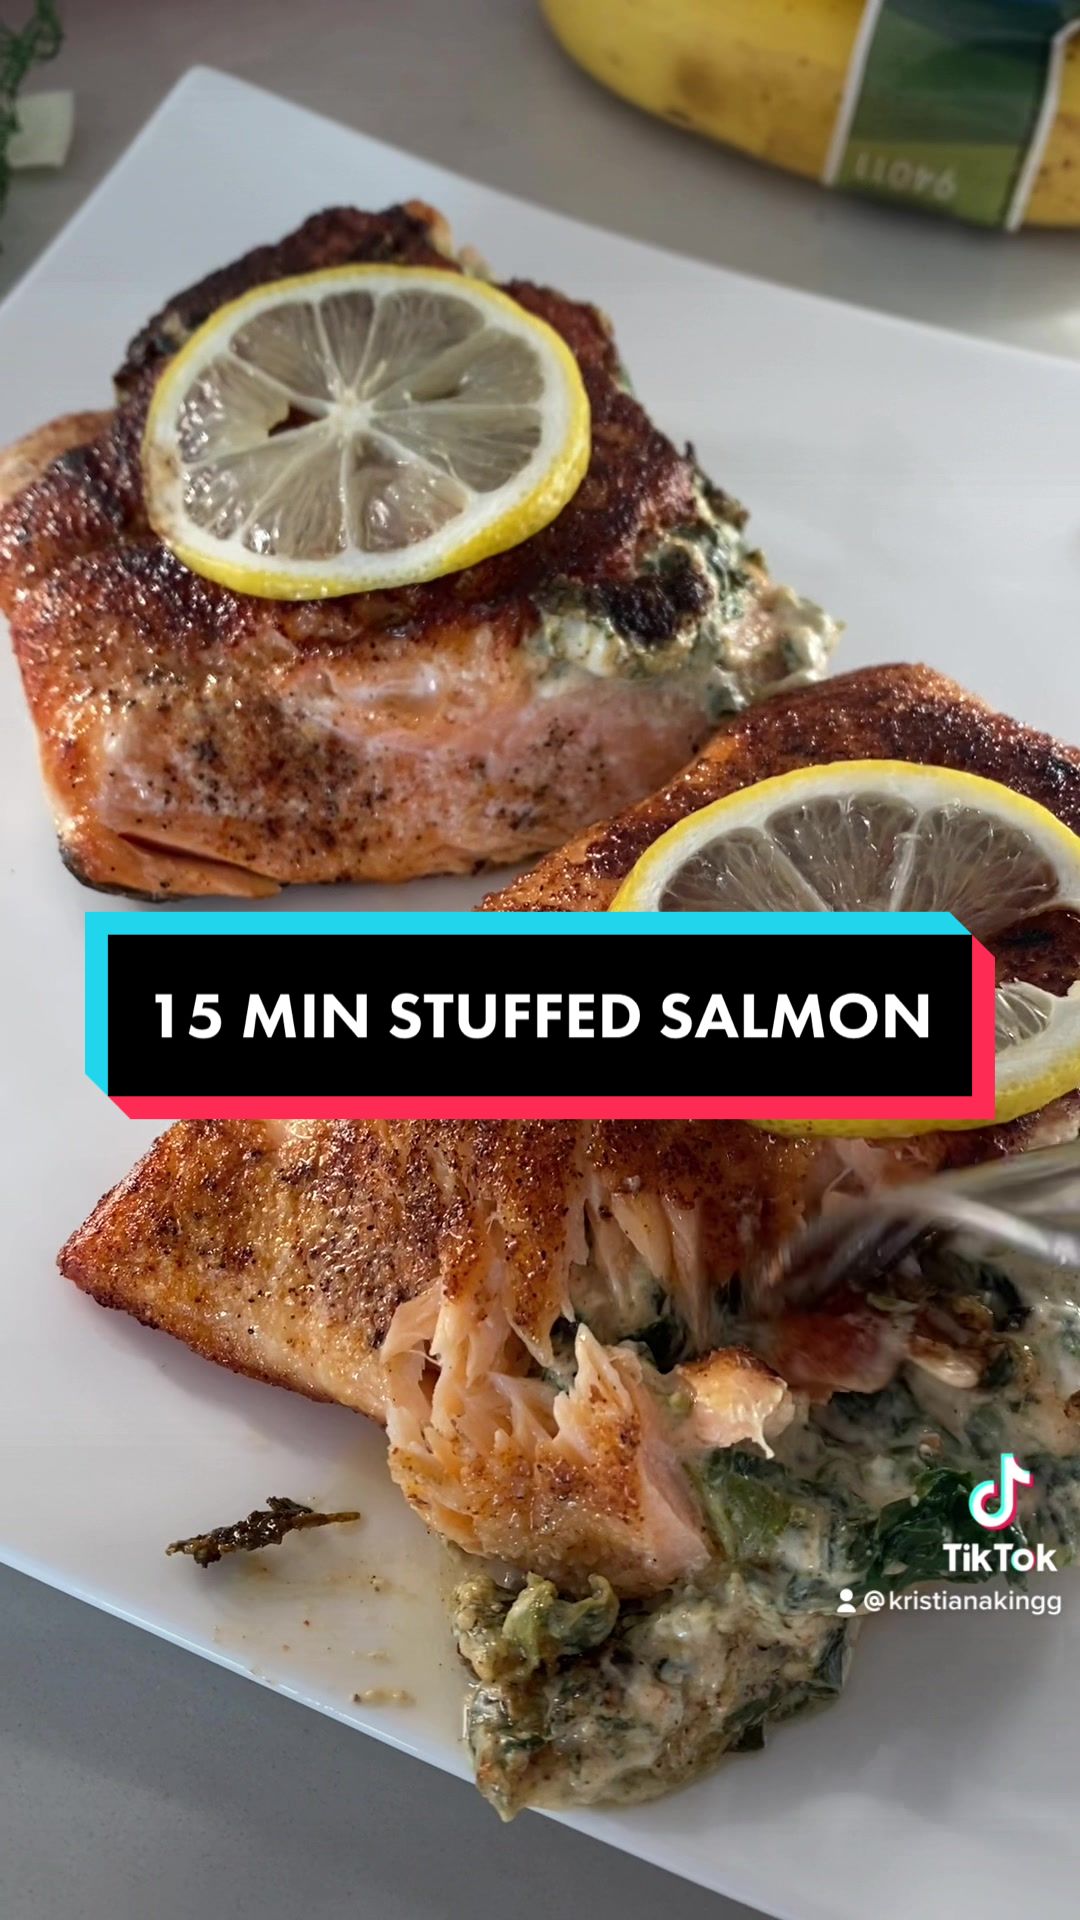 @15 MINUTE STUFFED SALMON RECIPE #fyp #stuffedsalmon #salmon ...